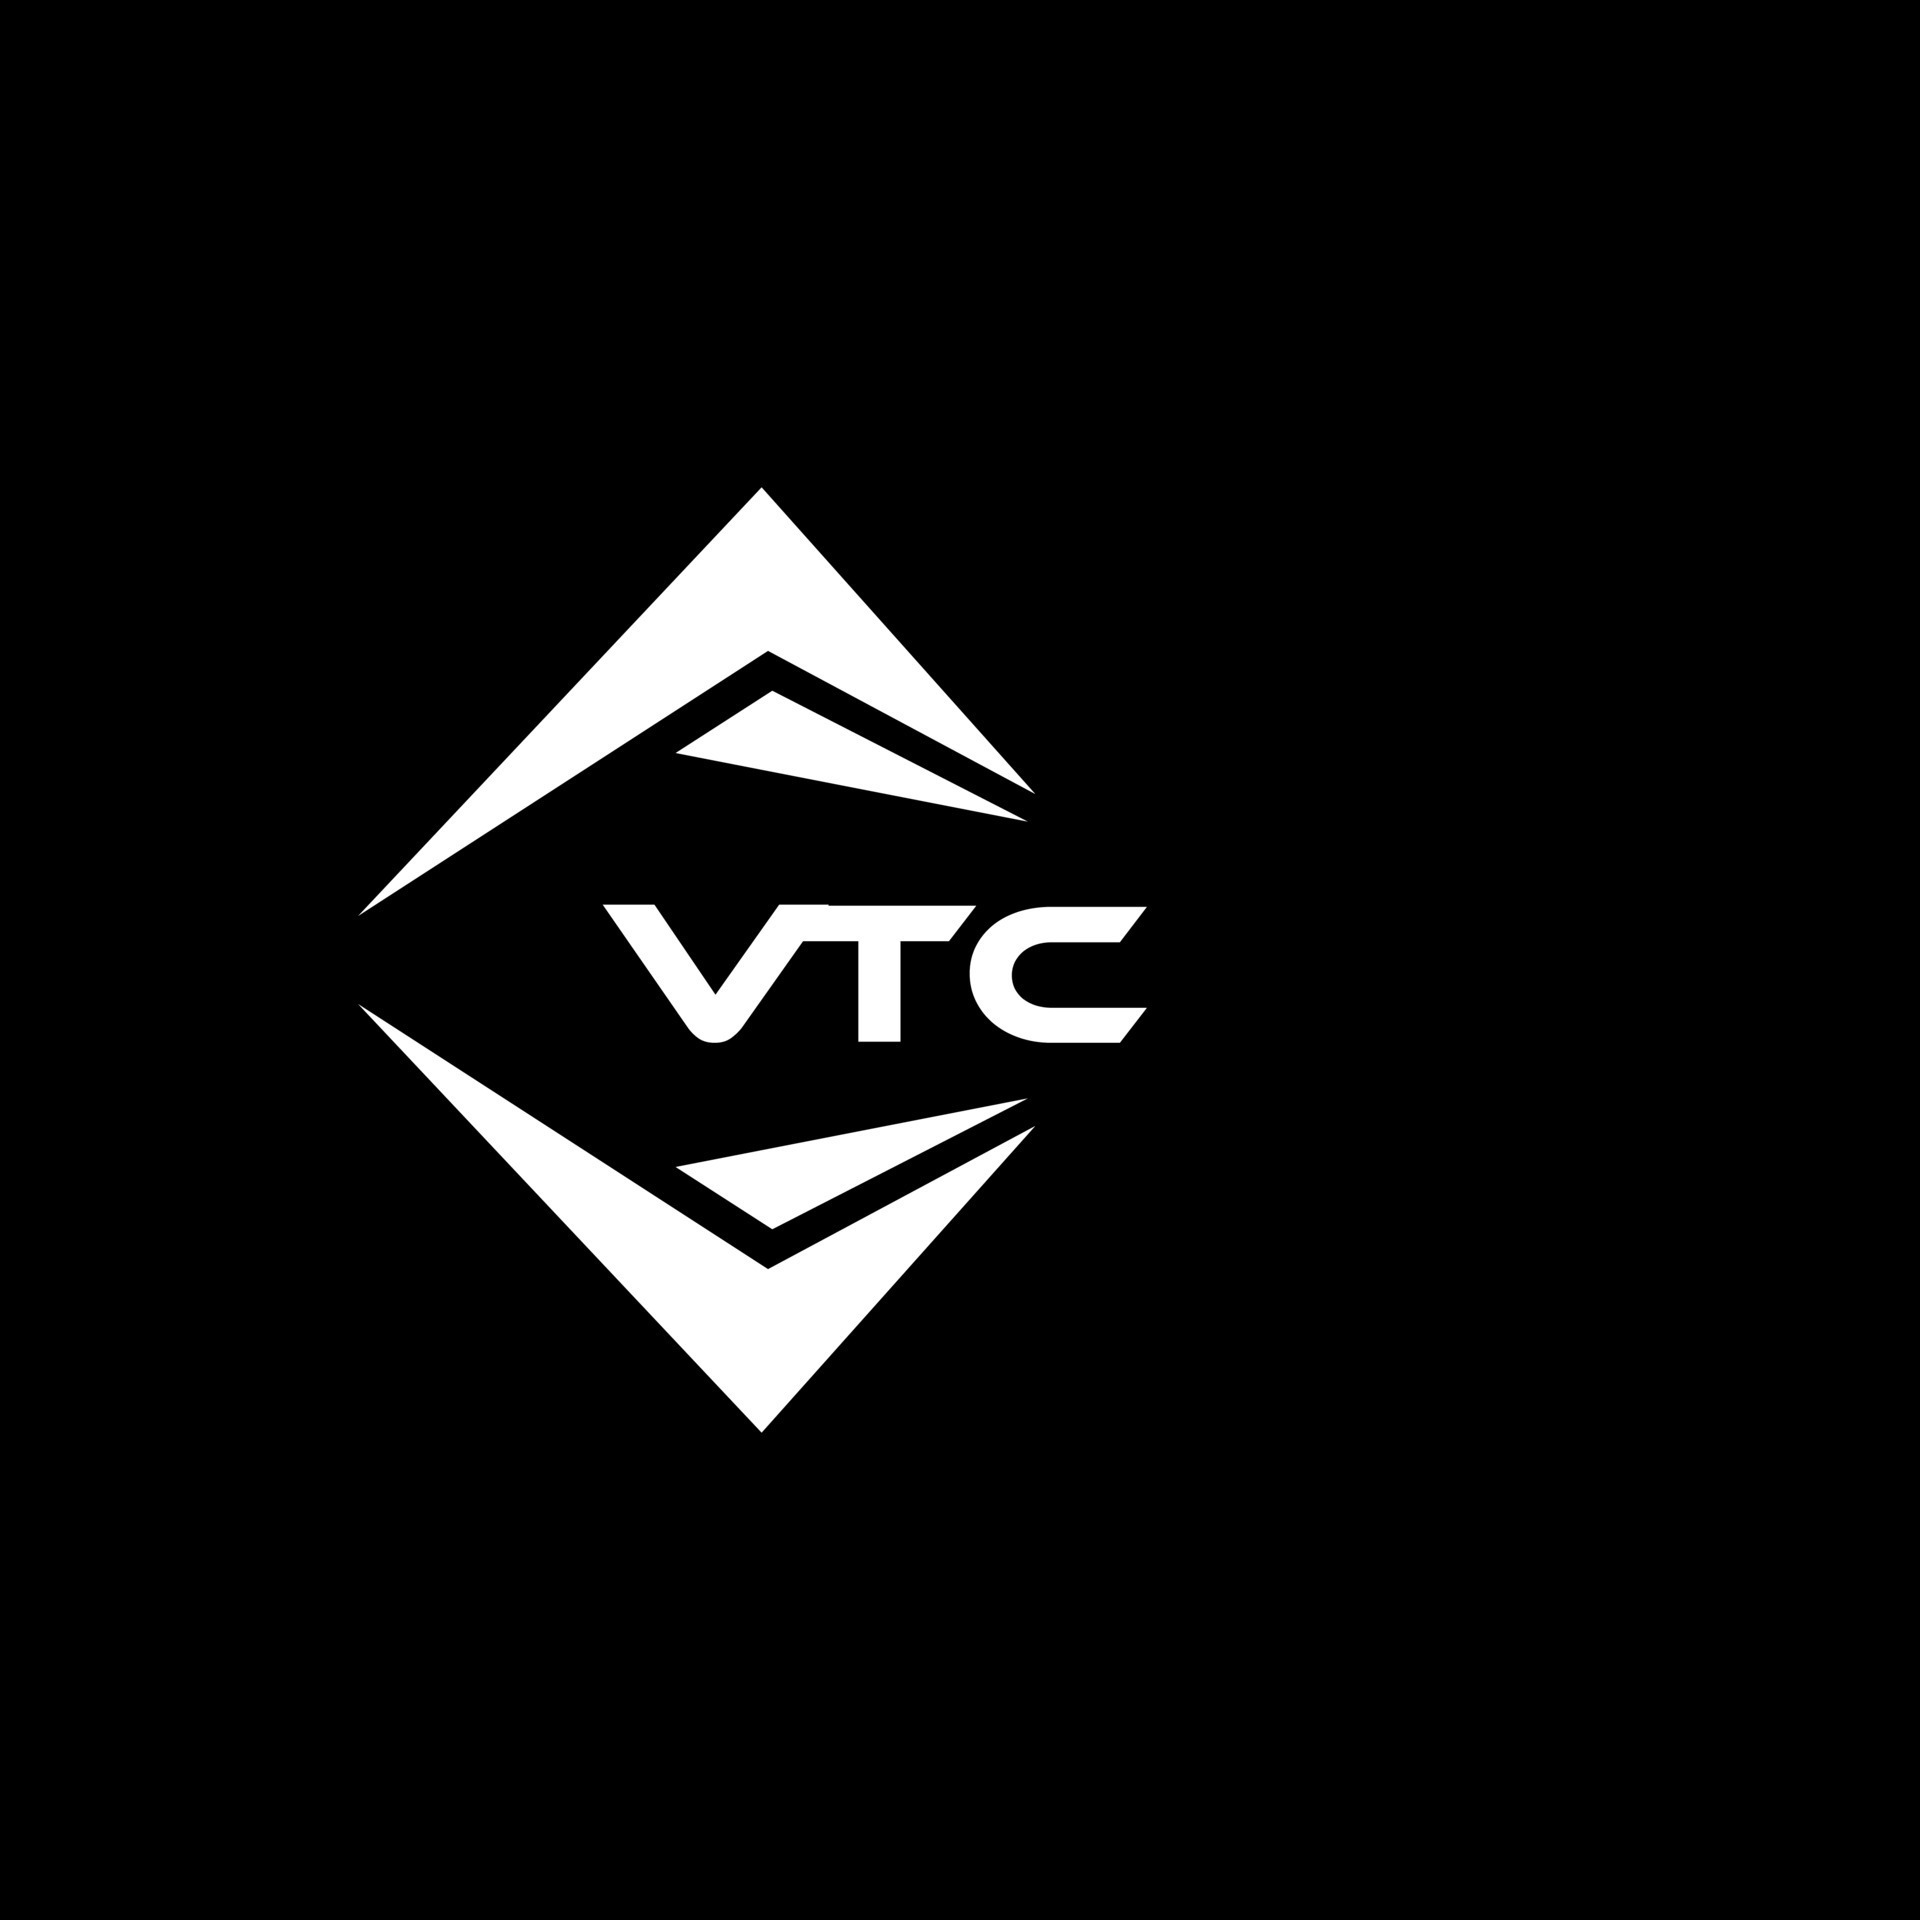 56 Logo Vtc Images, Stock Photos & Vectors | Shutterstock